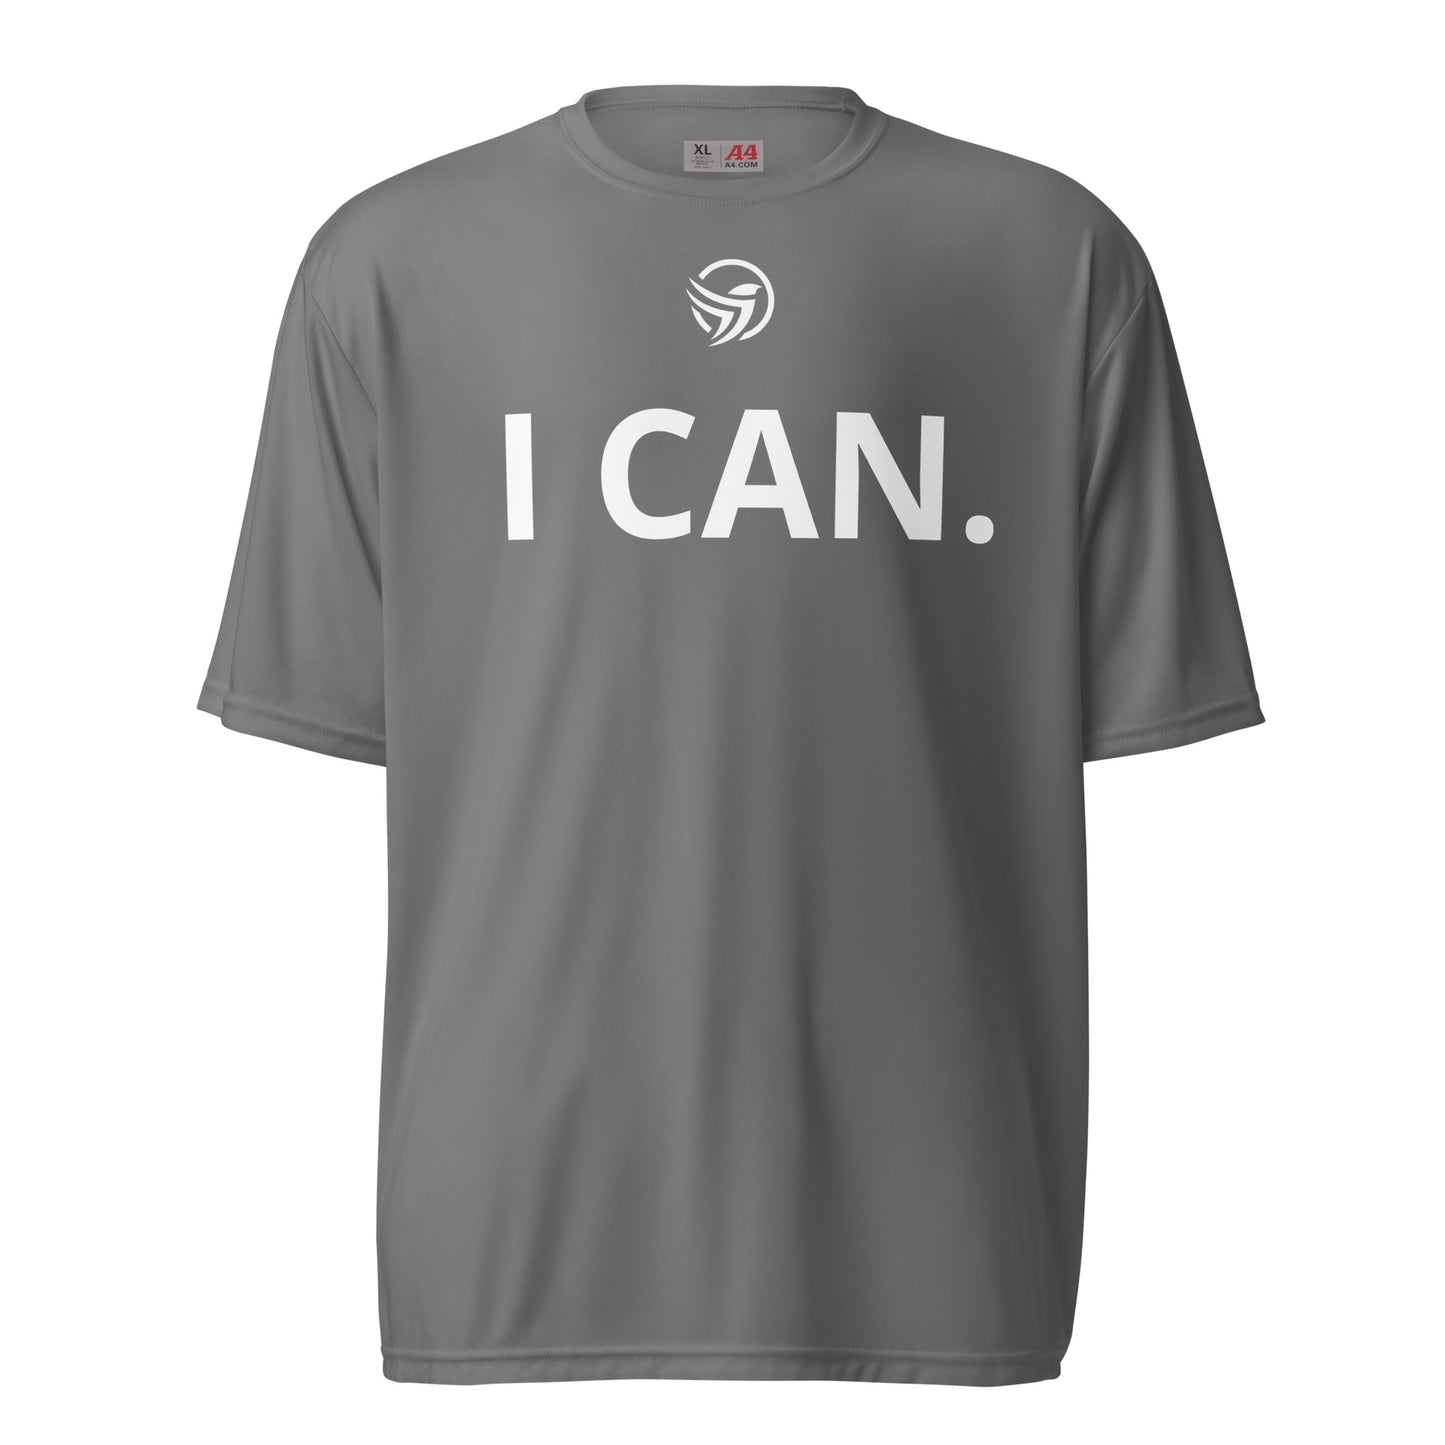 I CAN. Unisex Dri-fit Shirt